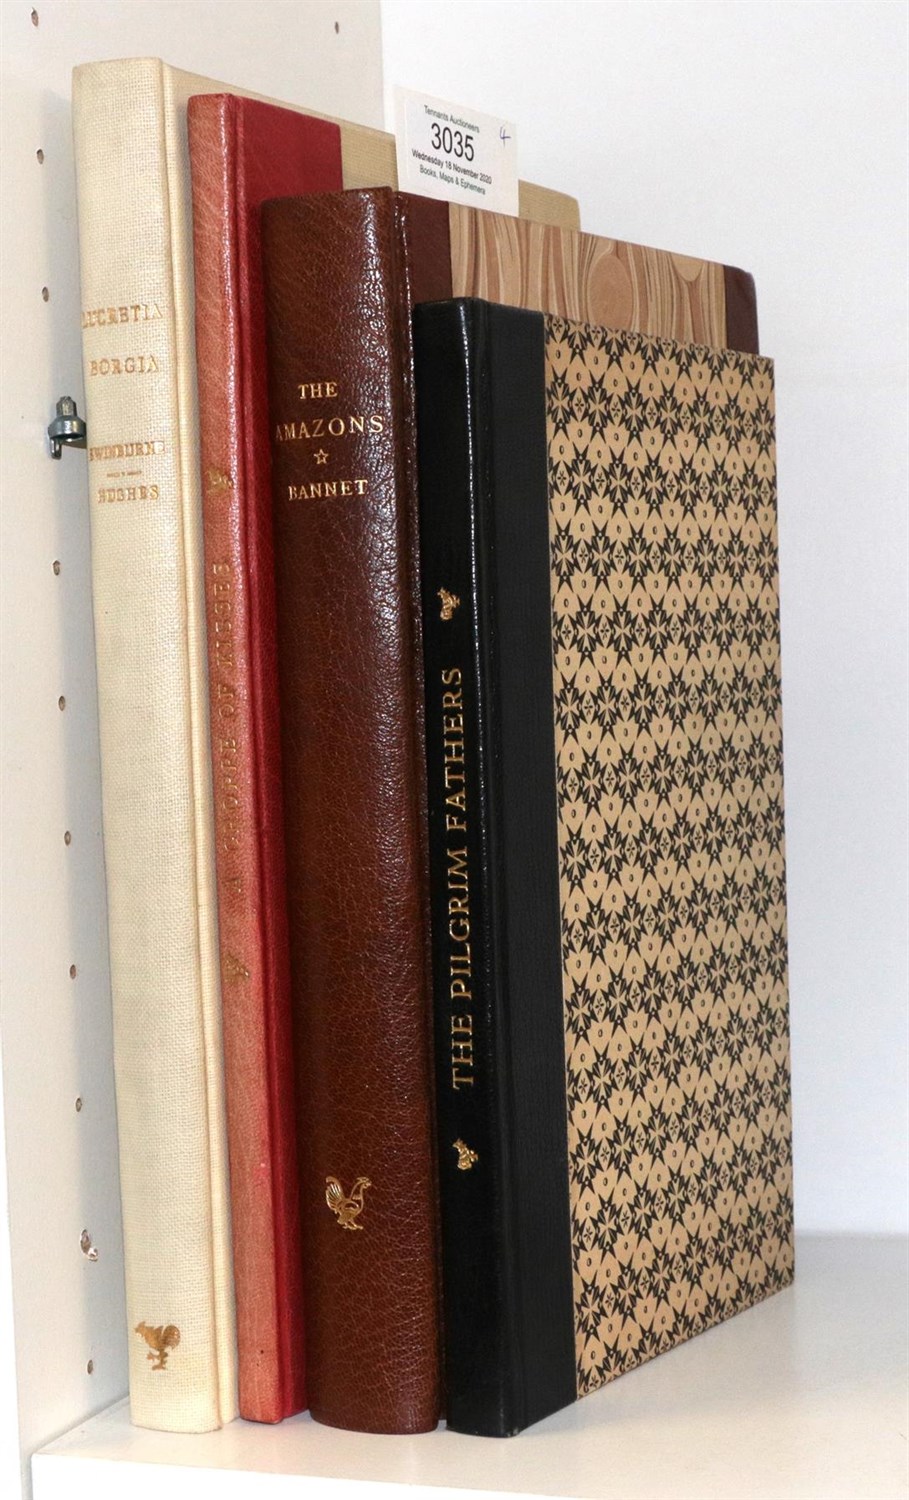 Lot 3035 - Golden Cockerel Press Bannet (Ivor), The Amazons, Golden Cockerel Press, 1948, numbered limited...